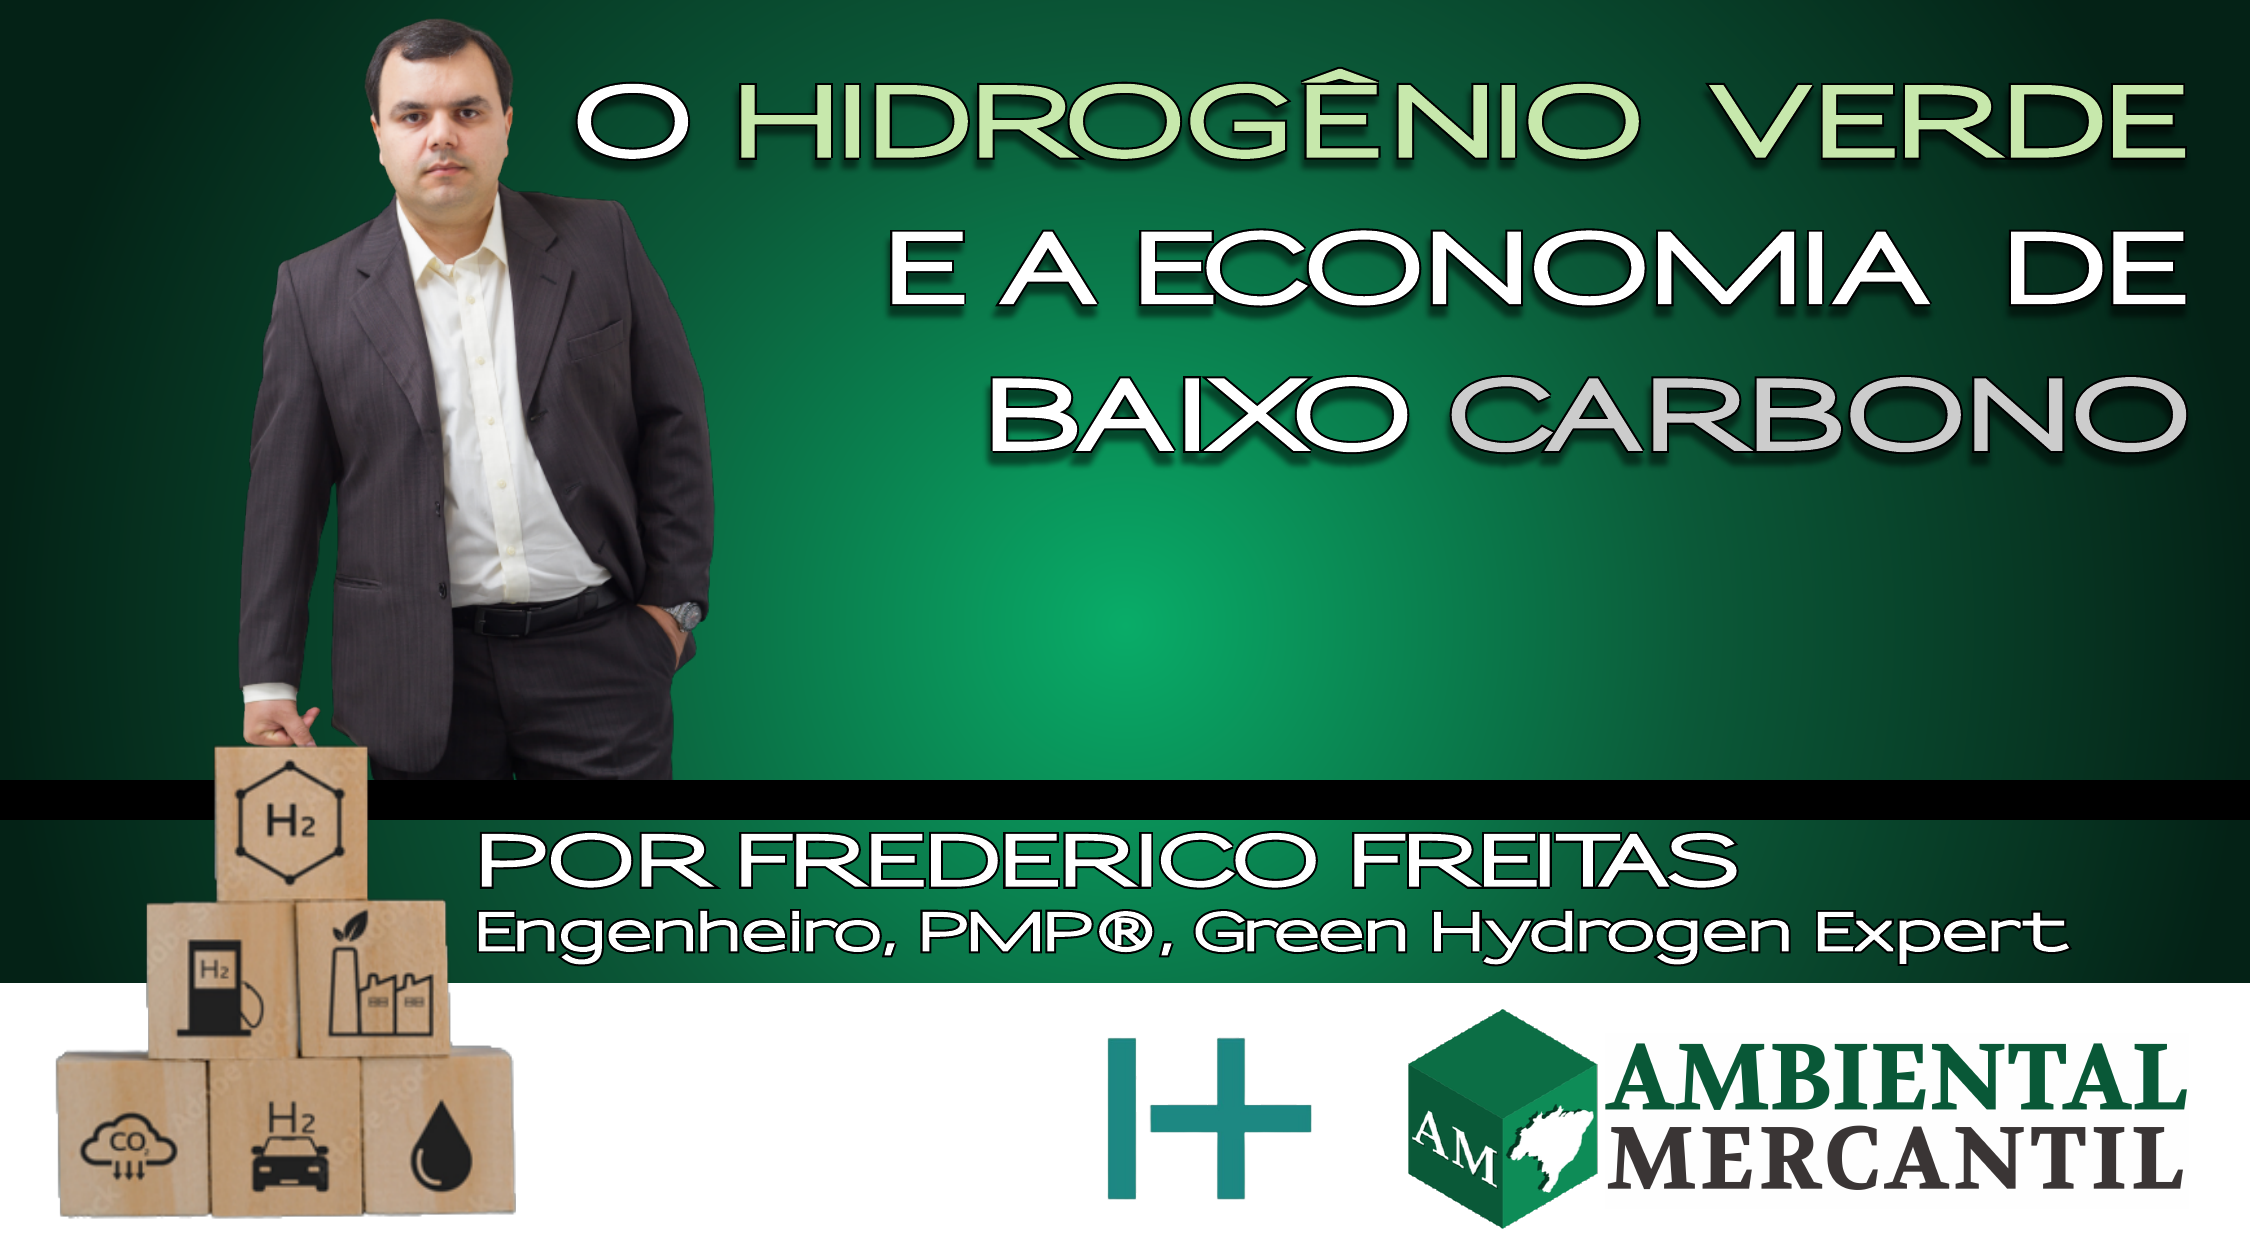 FREDERICO-FREITAS-COLUNISTA-HIDROGENIO-VERDE-BAIXO-CARBONO-AMBIENTAL-MERCANTILv4-540×300-1